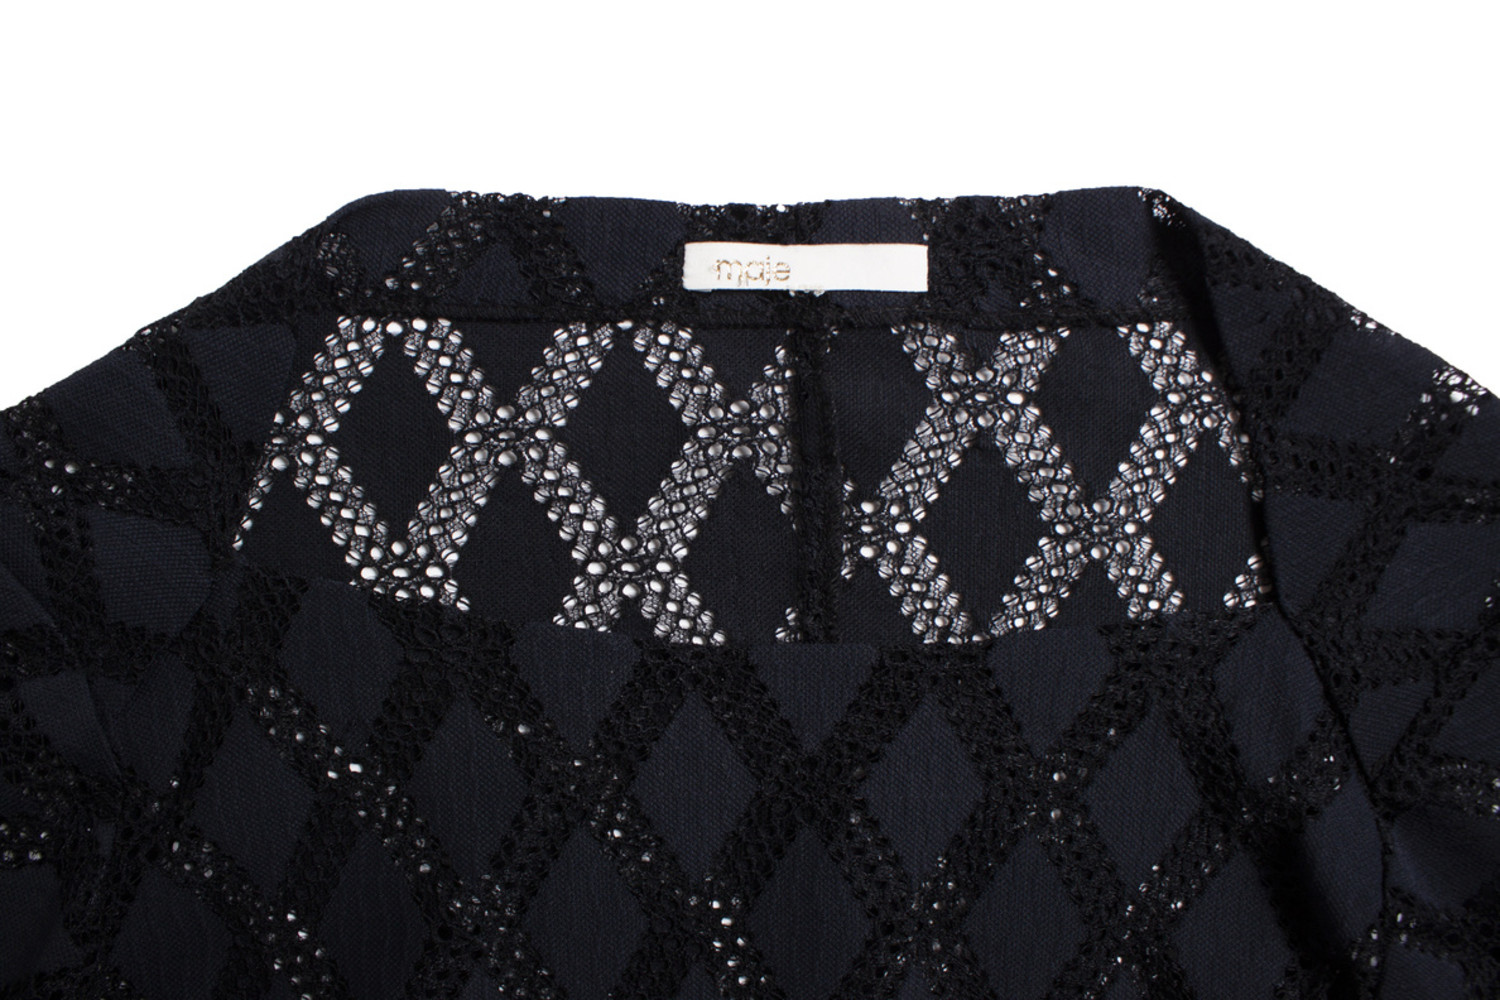 Maje, black open woven top with checkered print. - Unique Designer Pieces